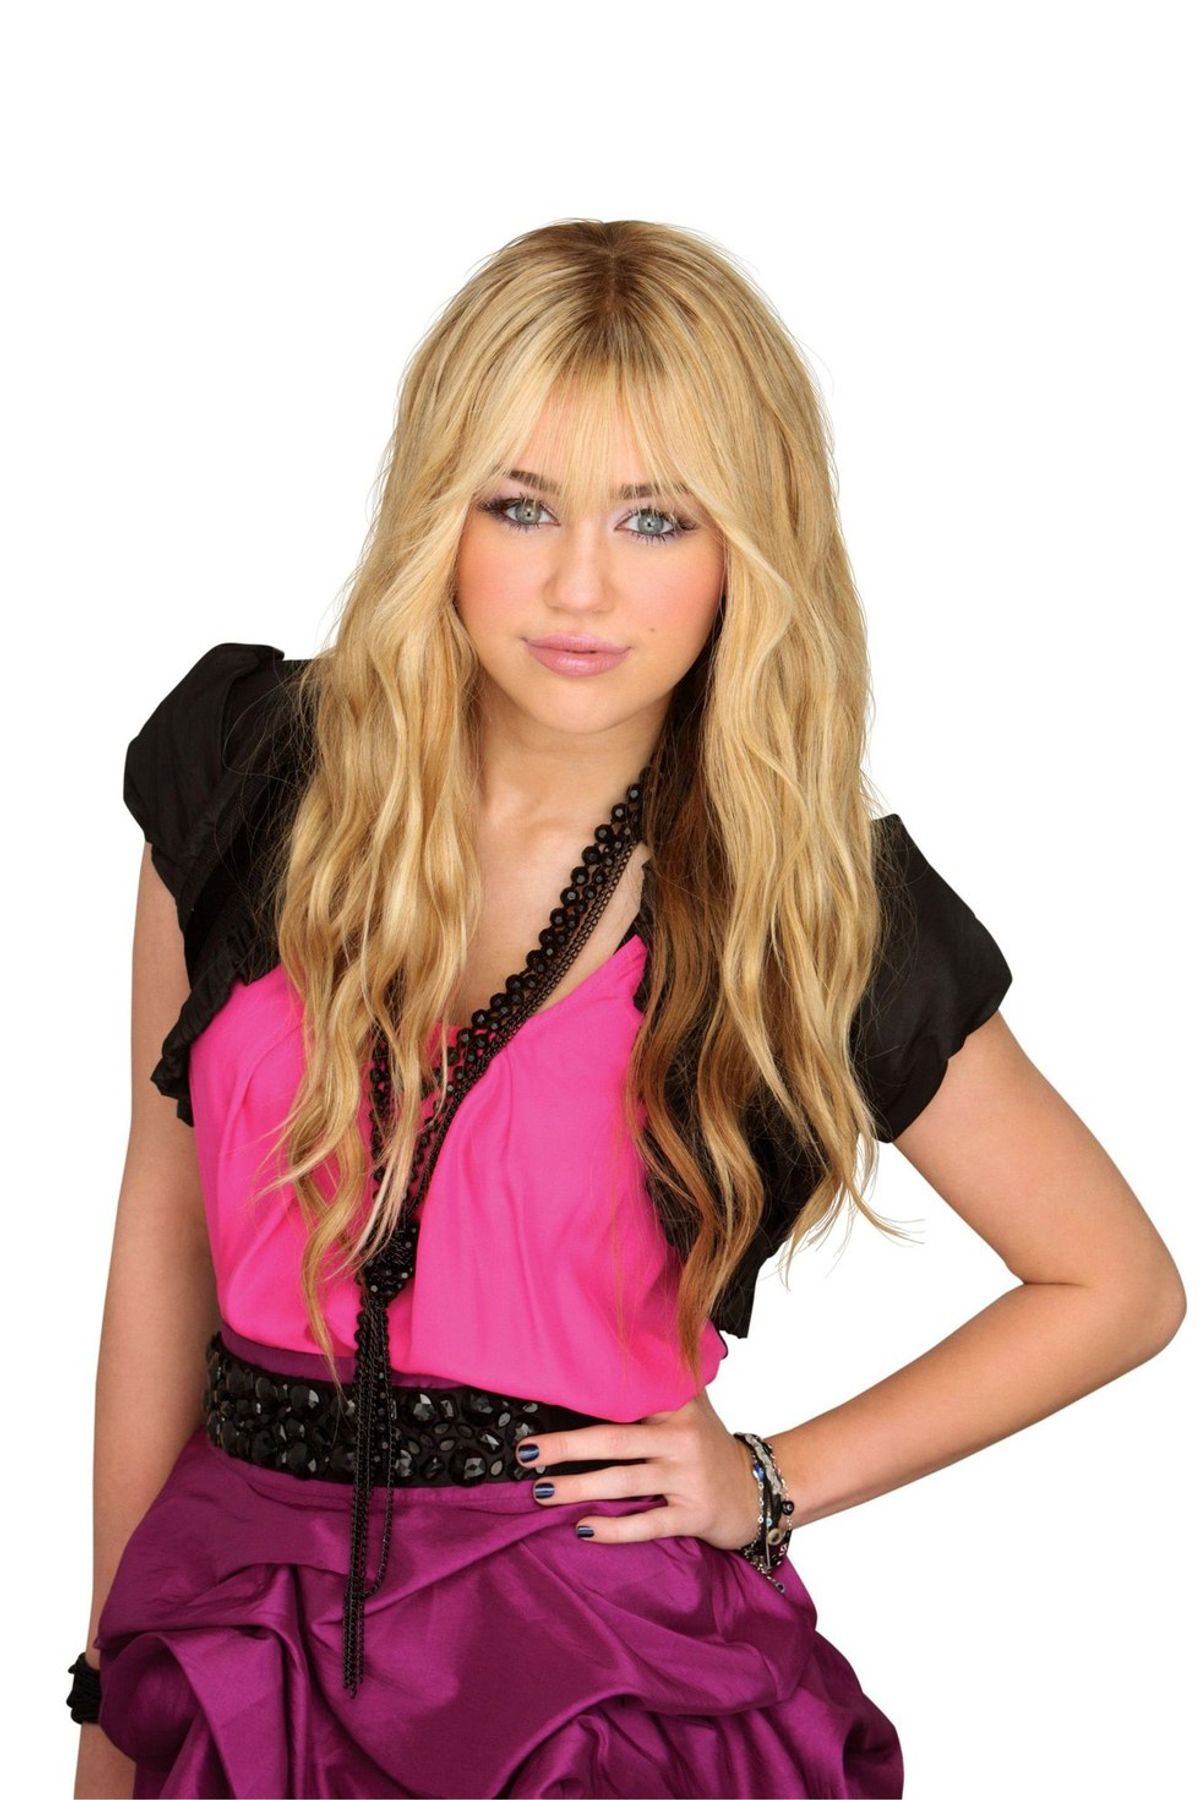 8 Reasons We Miss the Hannah Montana Days